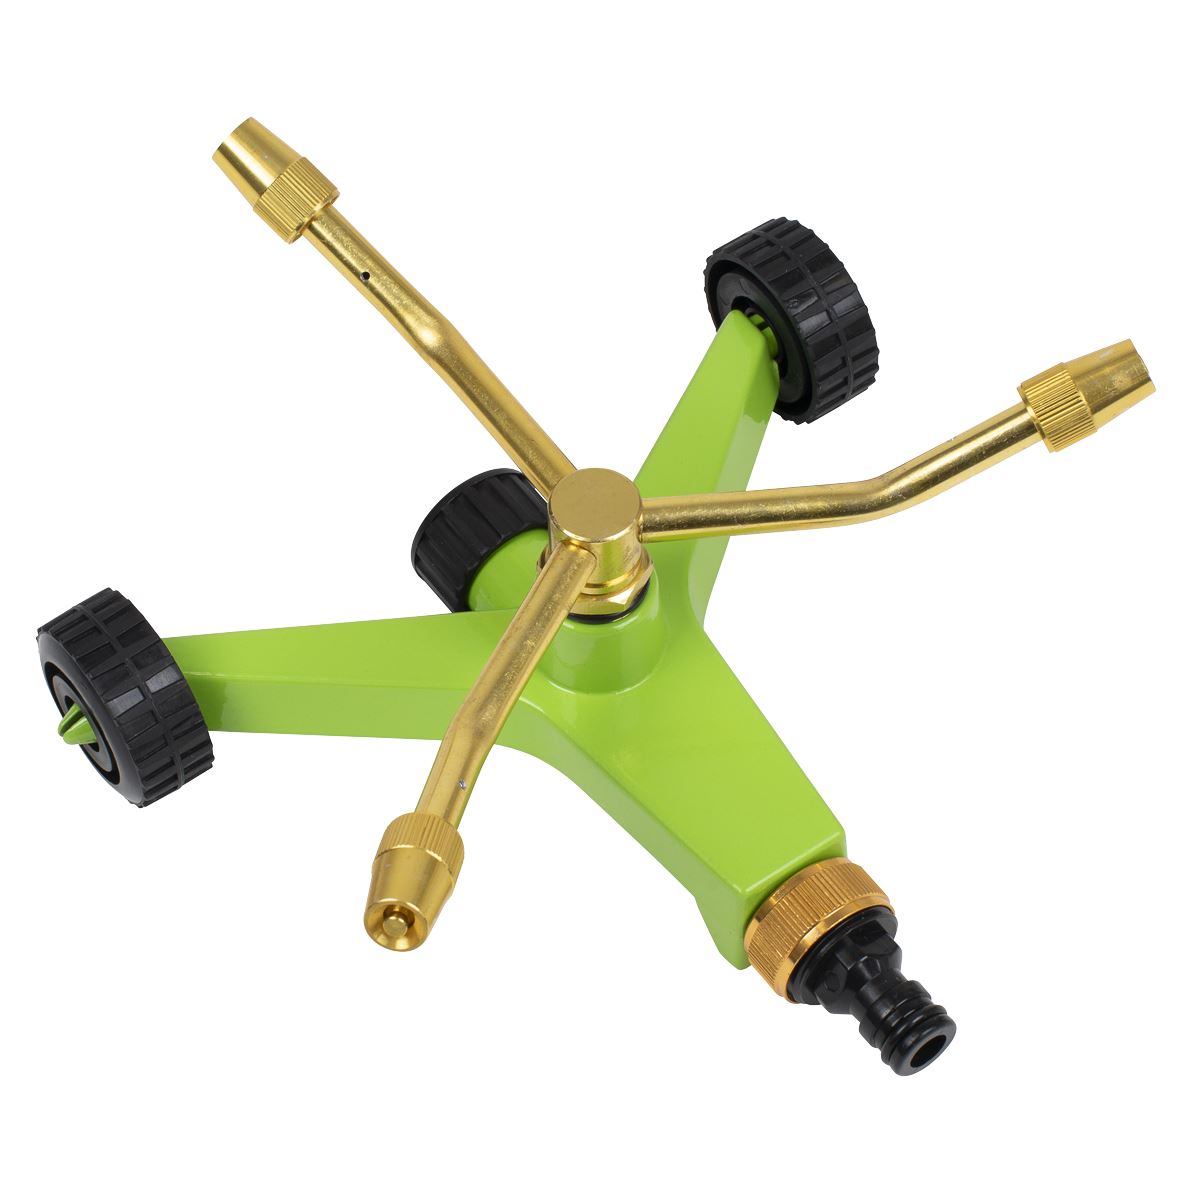 Sealey 3-Arm Brass Sprinkler with Metal Wheeled Base